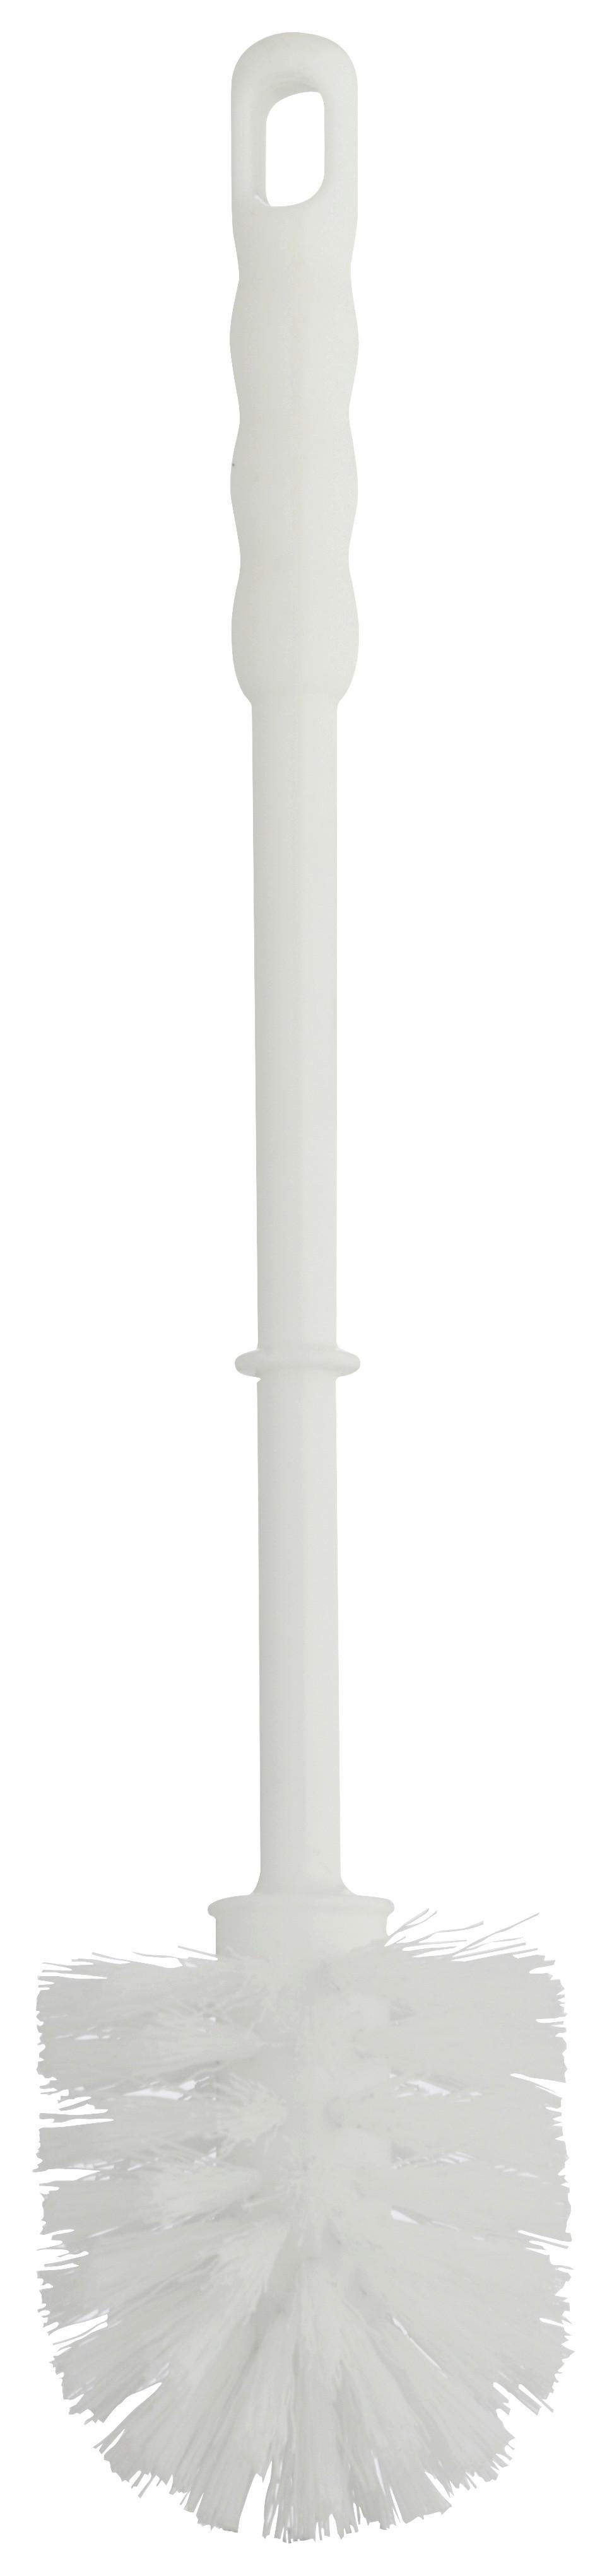 WC-Bürste Kunststoff Weiß D/H: 7,5/37 cm - Weiß, MODERN, Kunststoff (7,5/37cm)